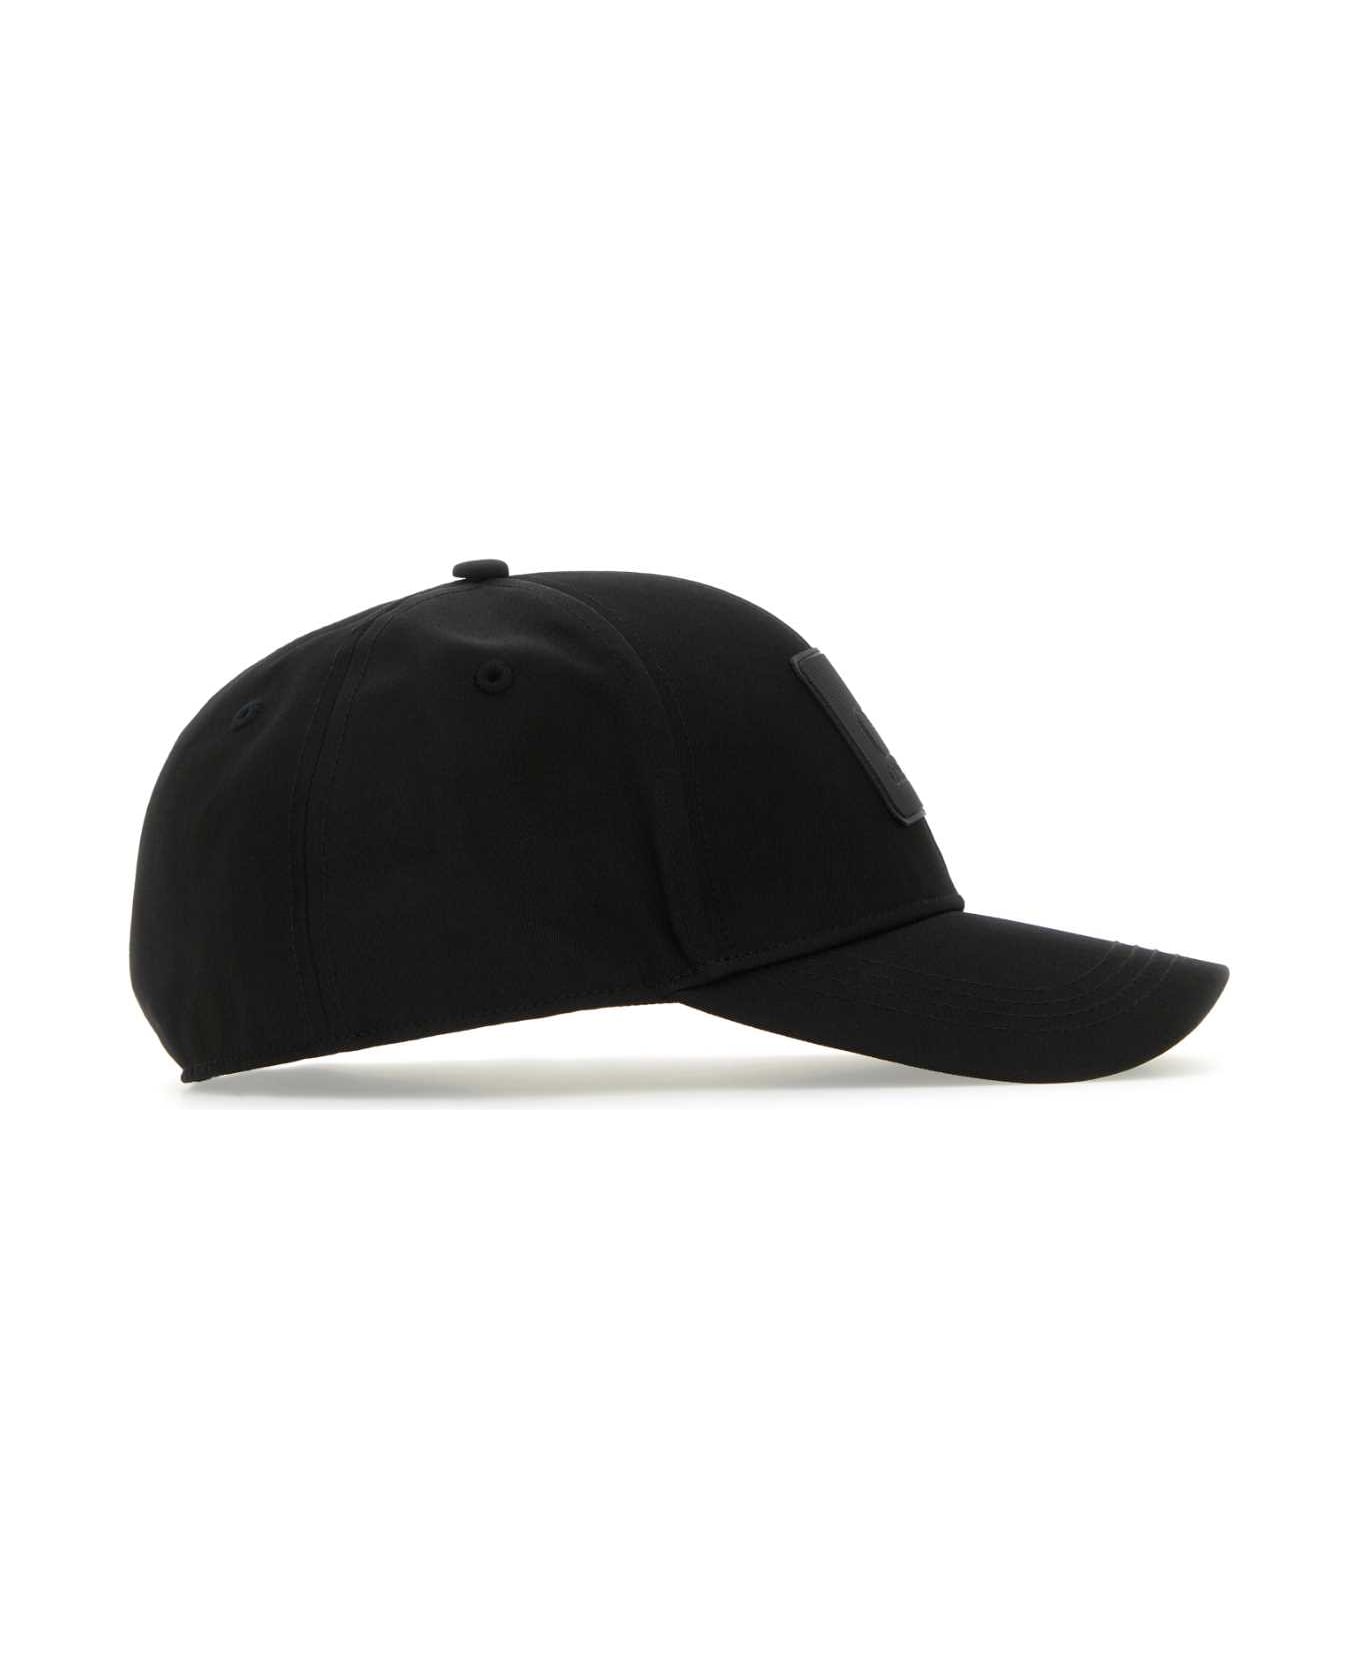 C.P. Company Black Polyester Baseball Cap - Black 帽子